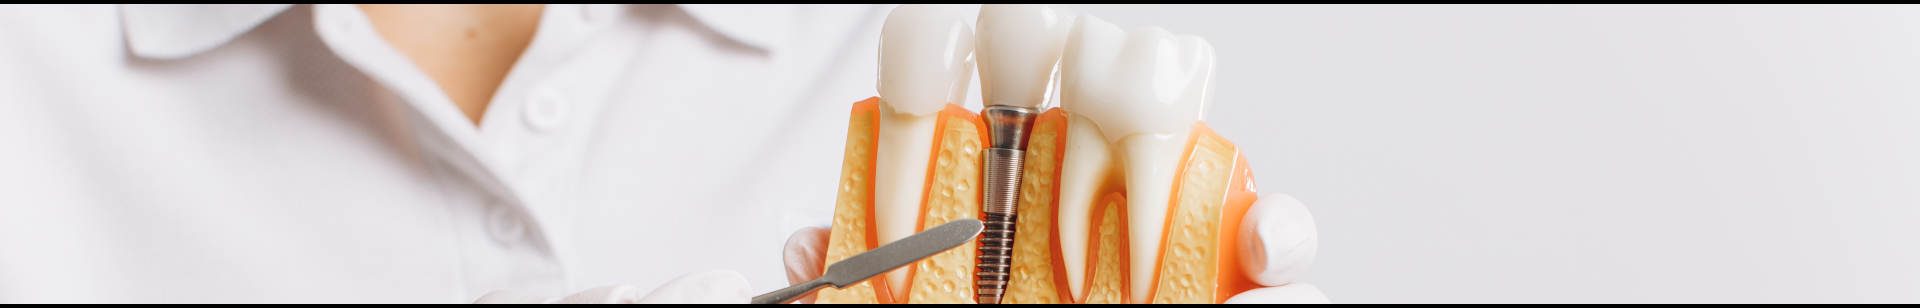 implants dentaires argenteuil